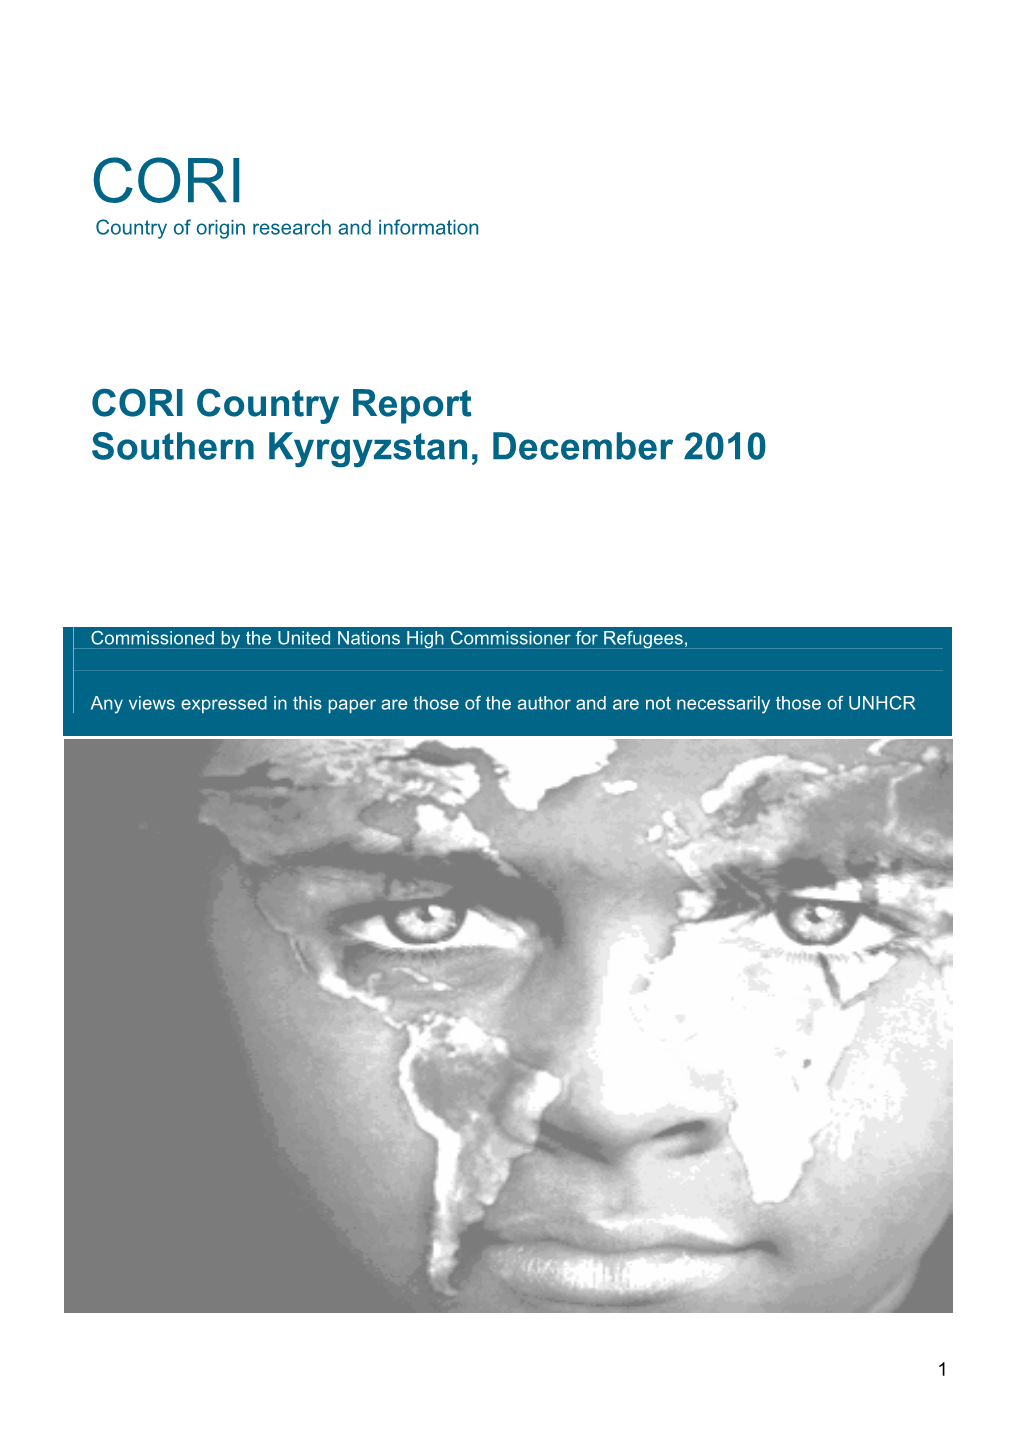 CORI Country Report Southern Kyrgyzstan, December 2010